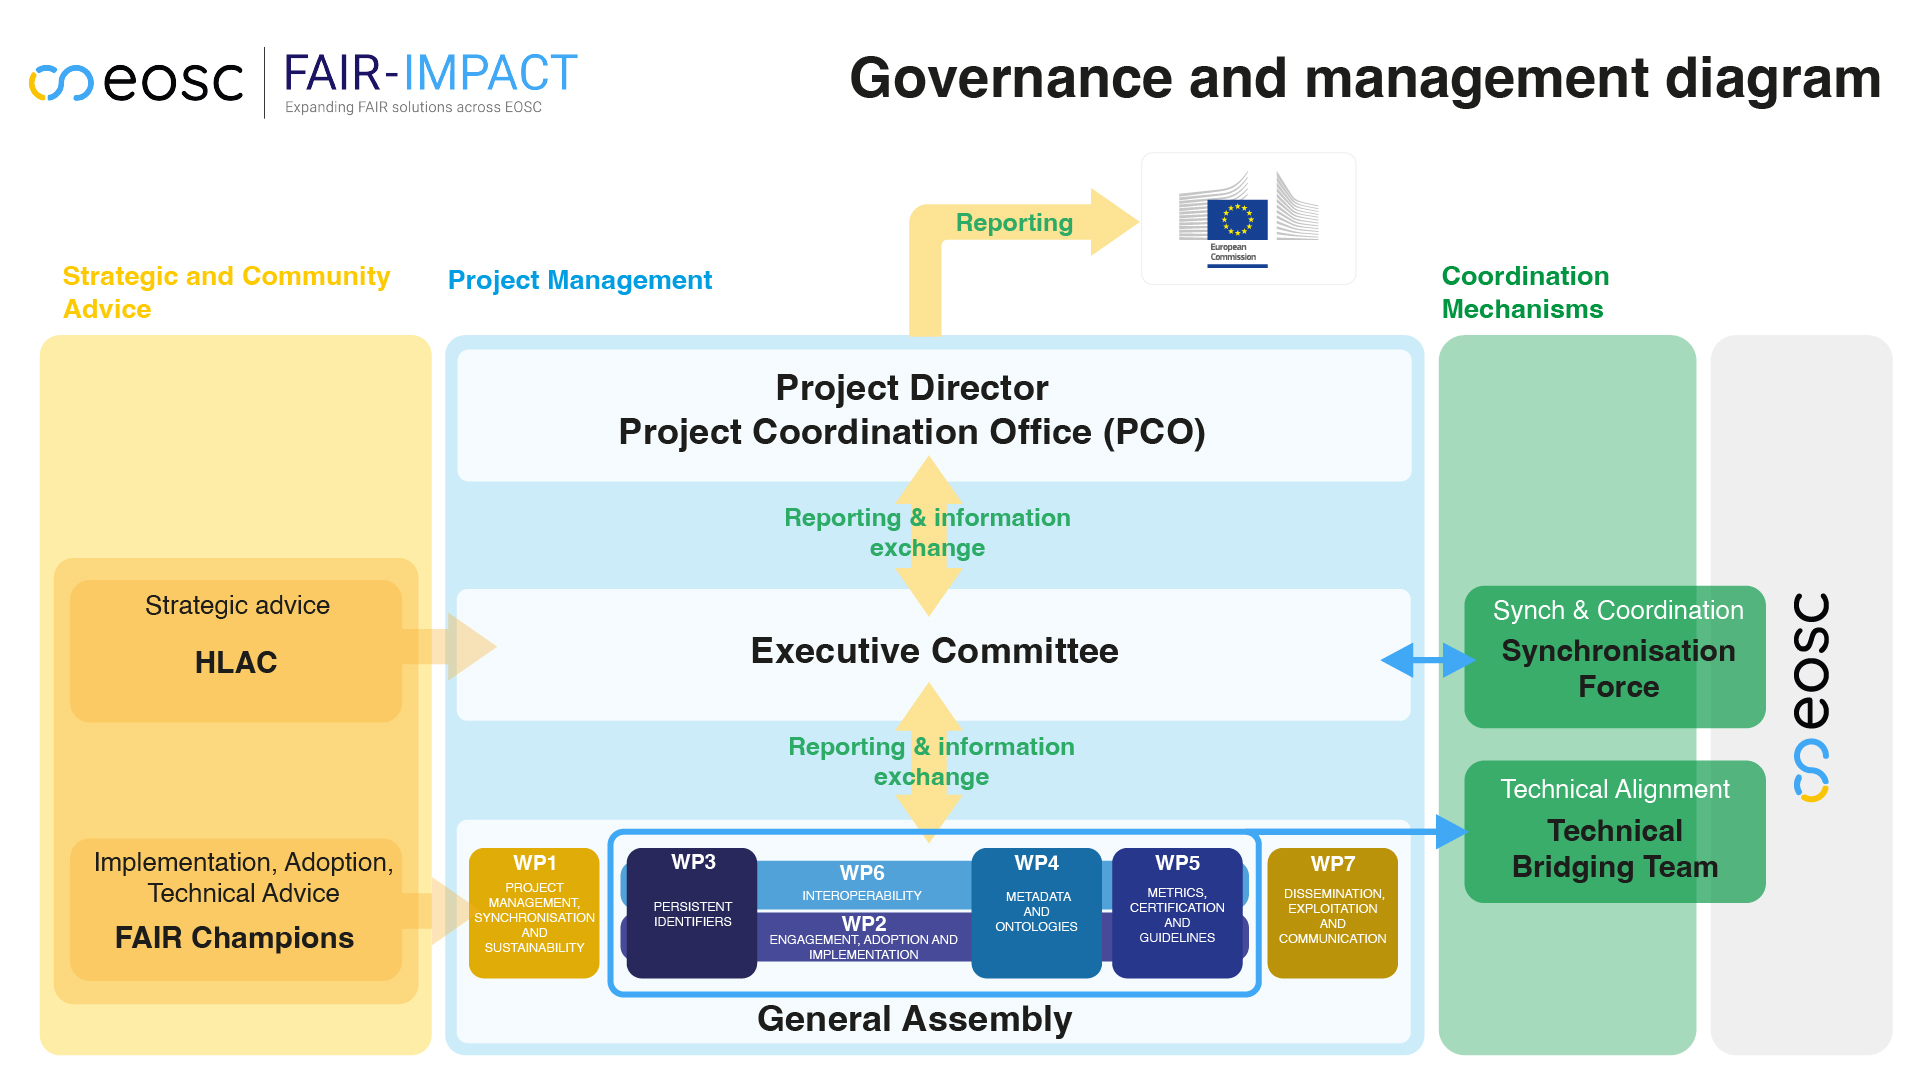 FAIR-IMPACT governance and management diagram